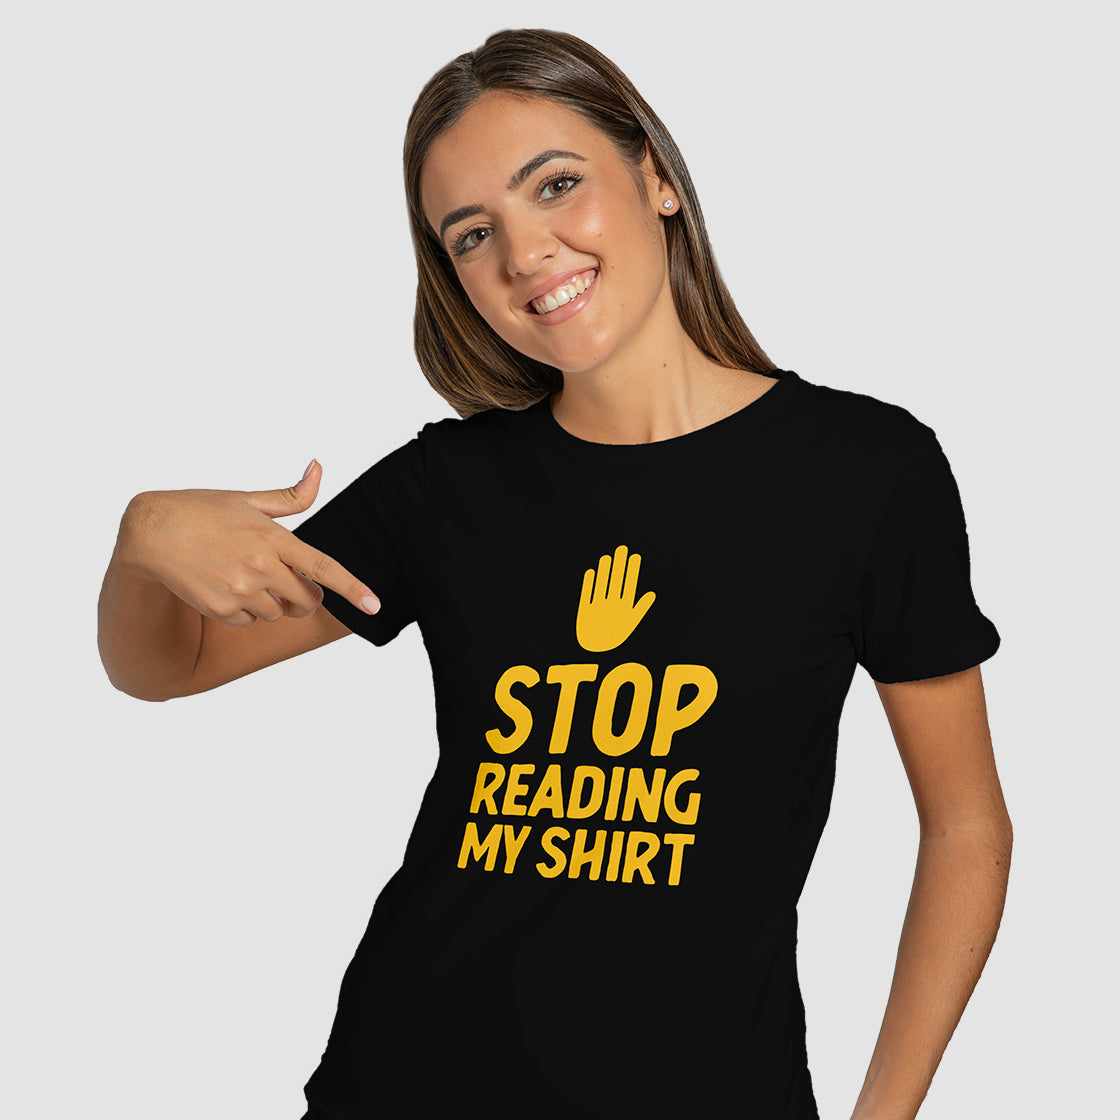 "Stop Reading my T-Shirt" T-Shirt